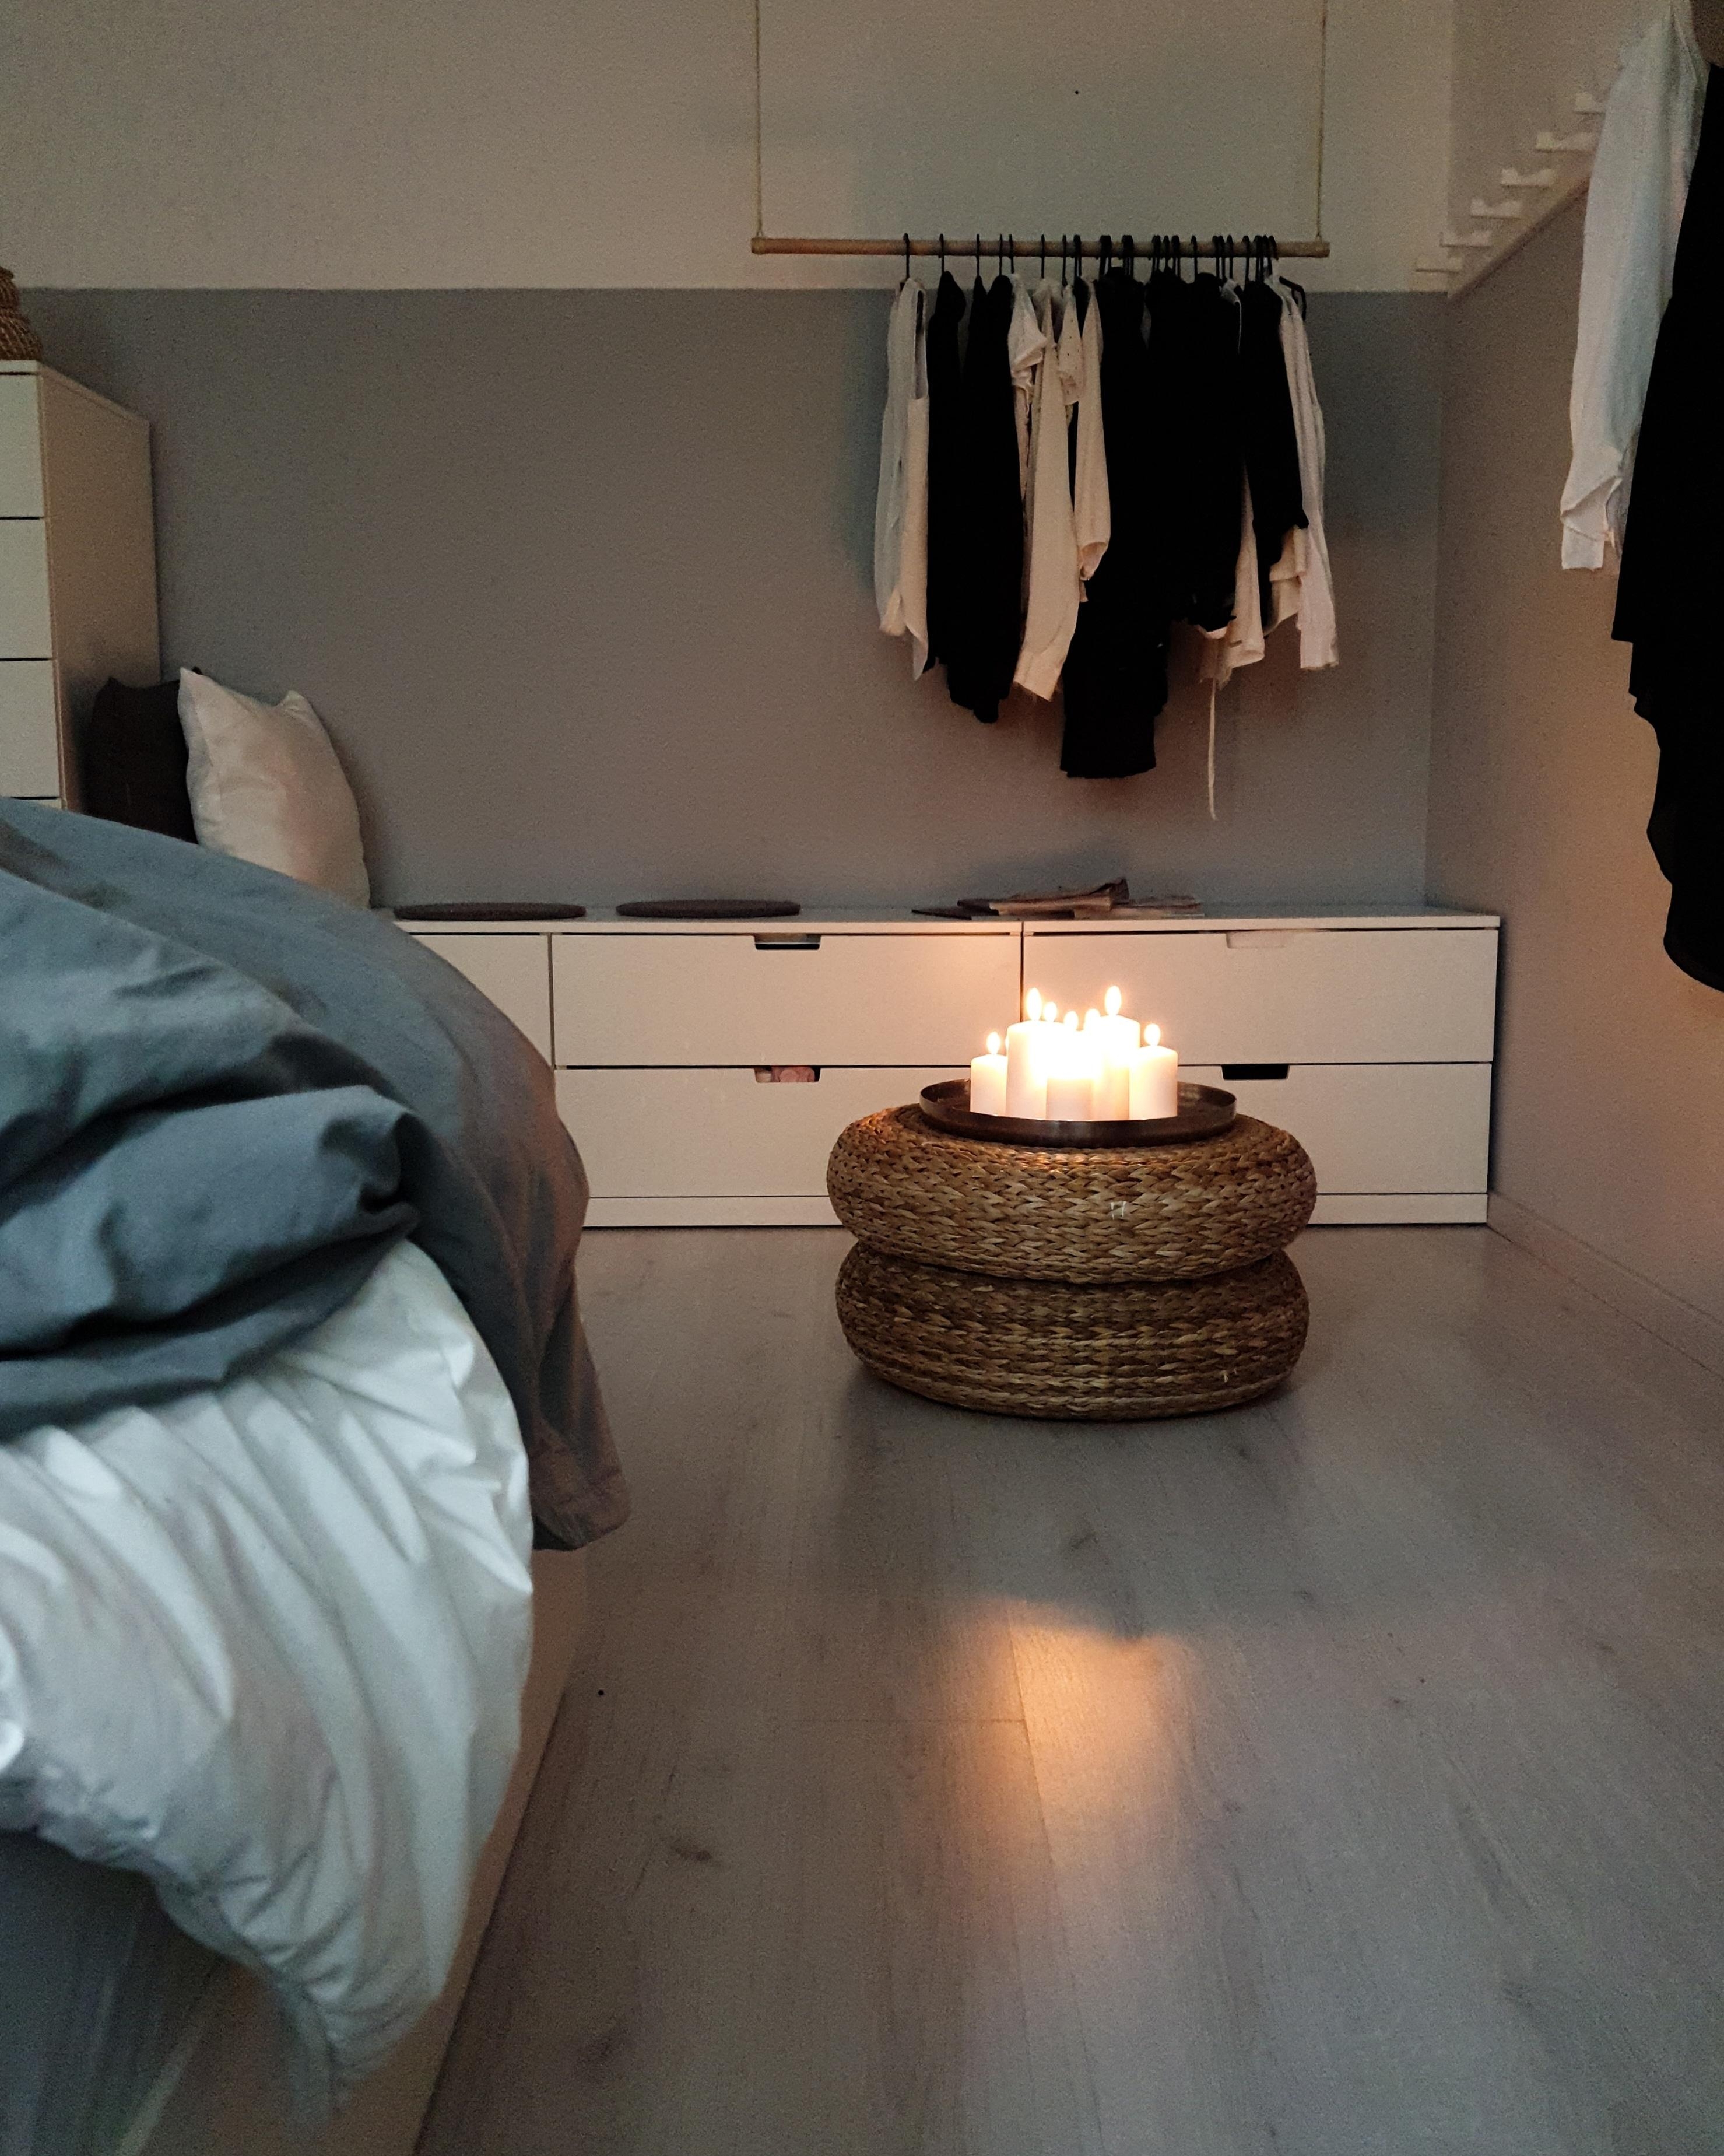 #schlafzimmer #bedroom #interior #garderobe #hygge #kerzen #kleiderstange #diy